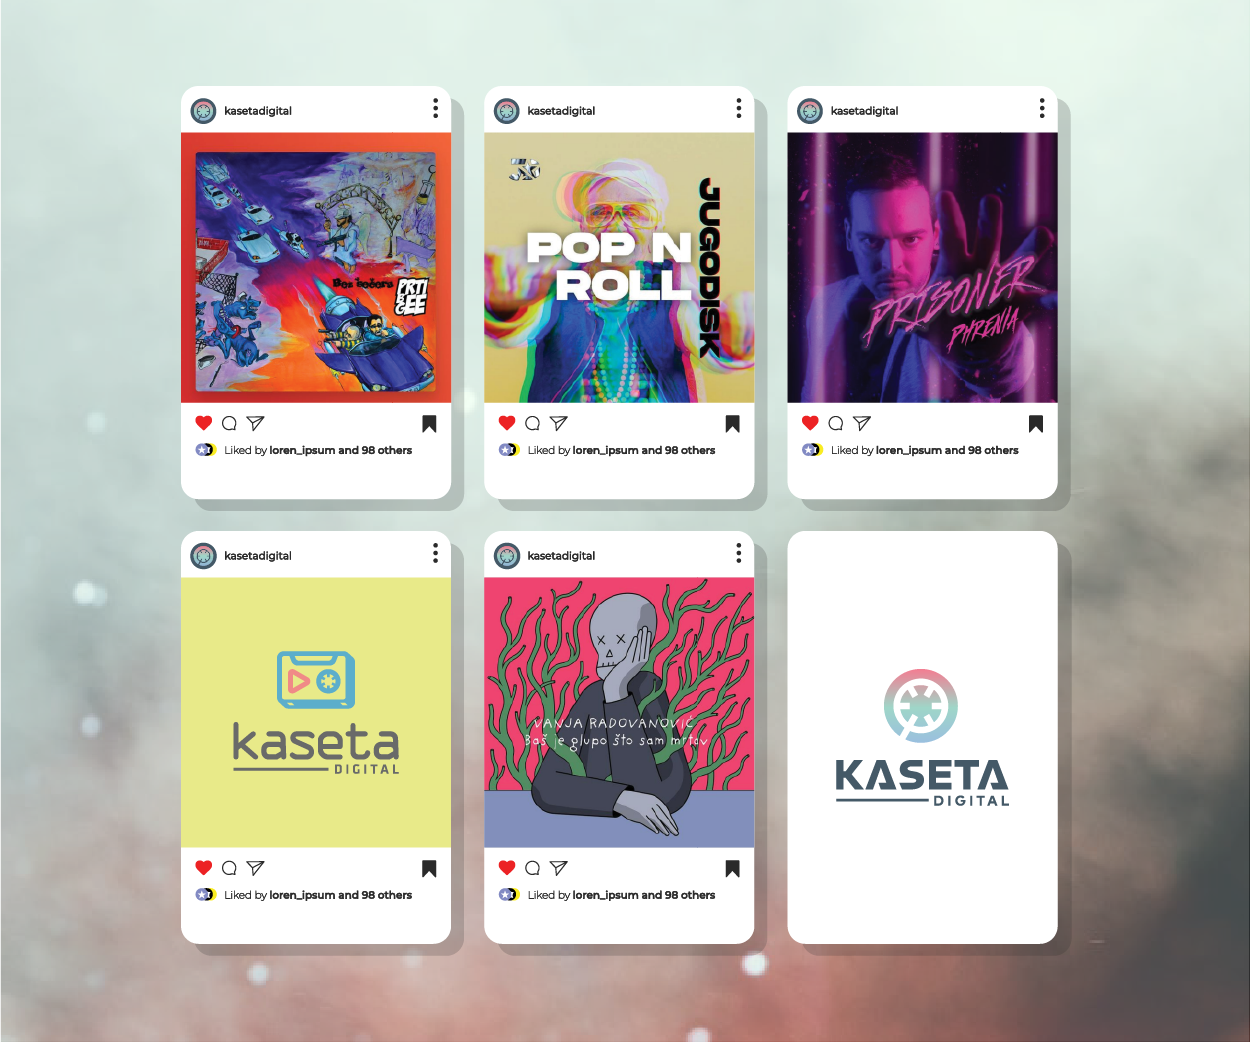 Kaseta Digital - digital distribution of music to stores and streaming/download platforms Instagram Post Design Image